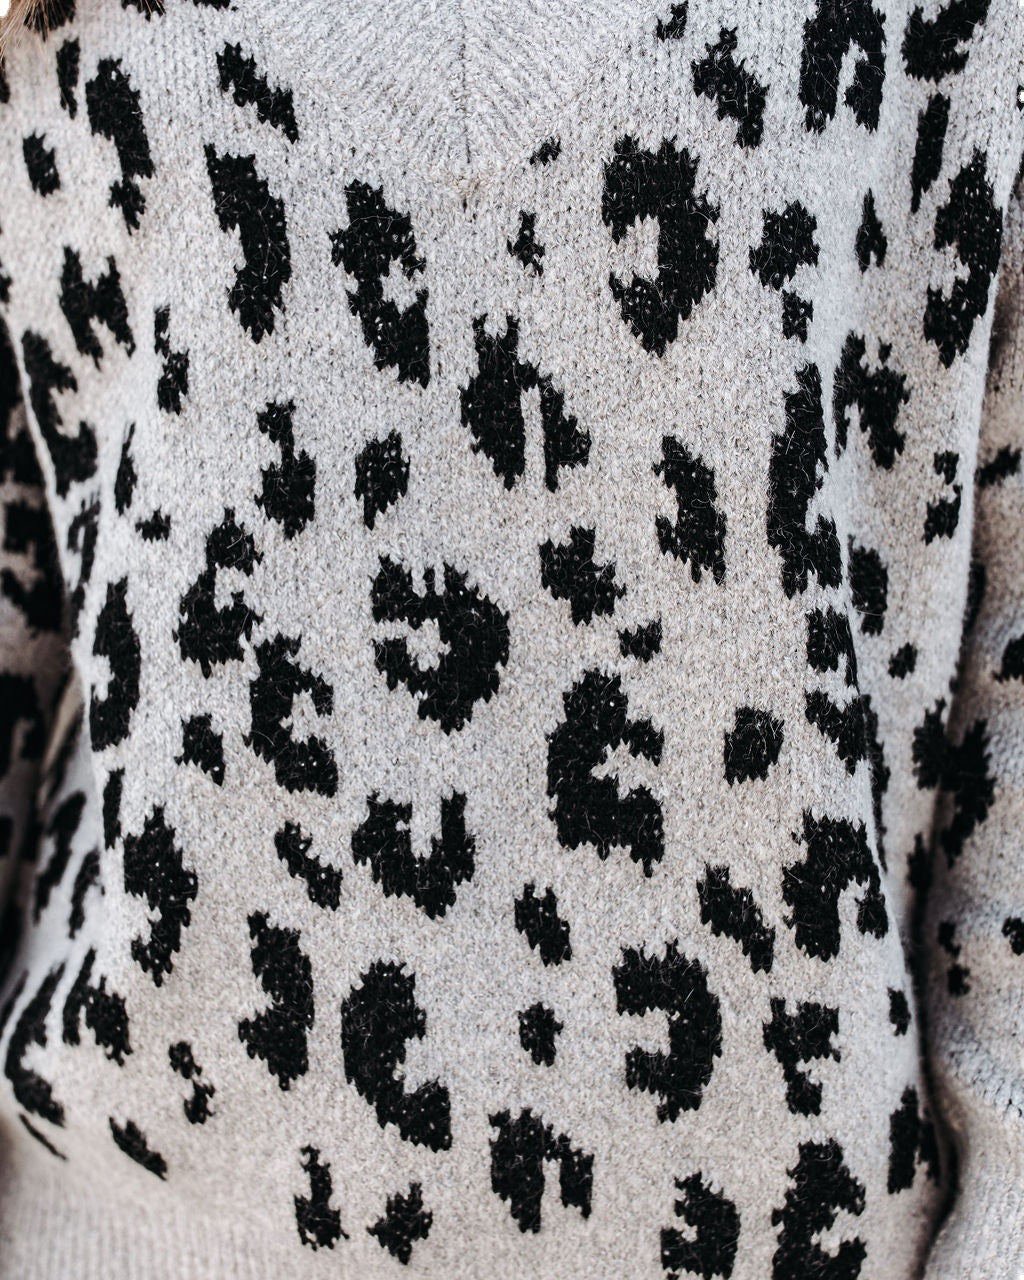 Women's V-neck Leopard Print Sweater